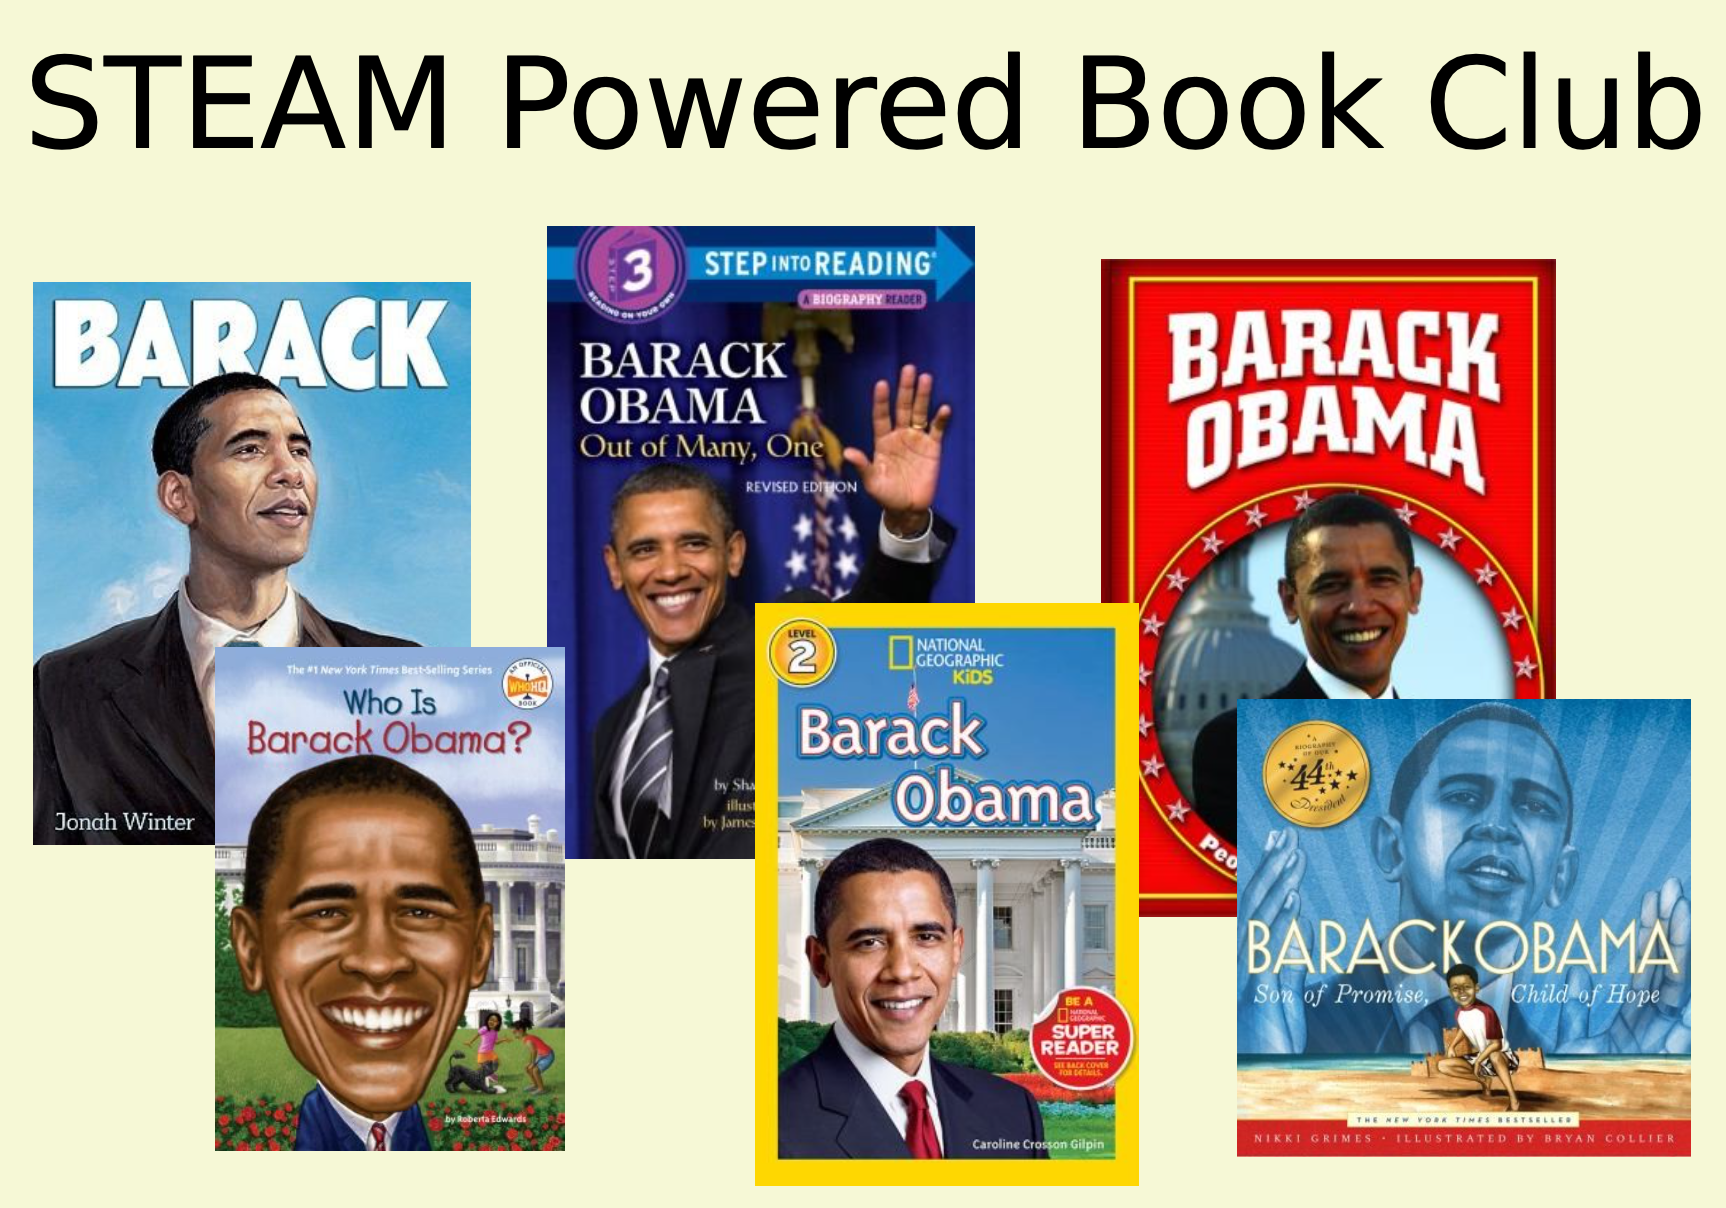 Barack Obama biographies